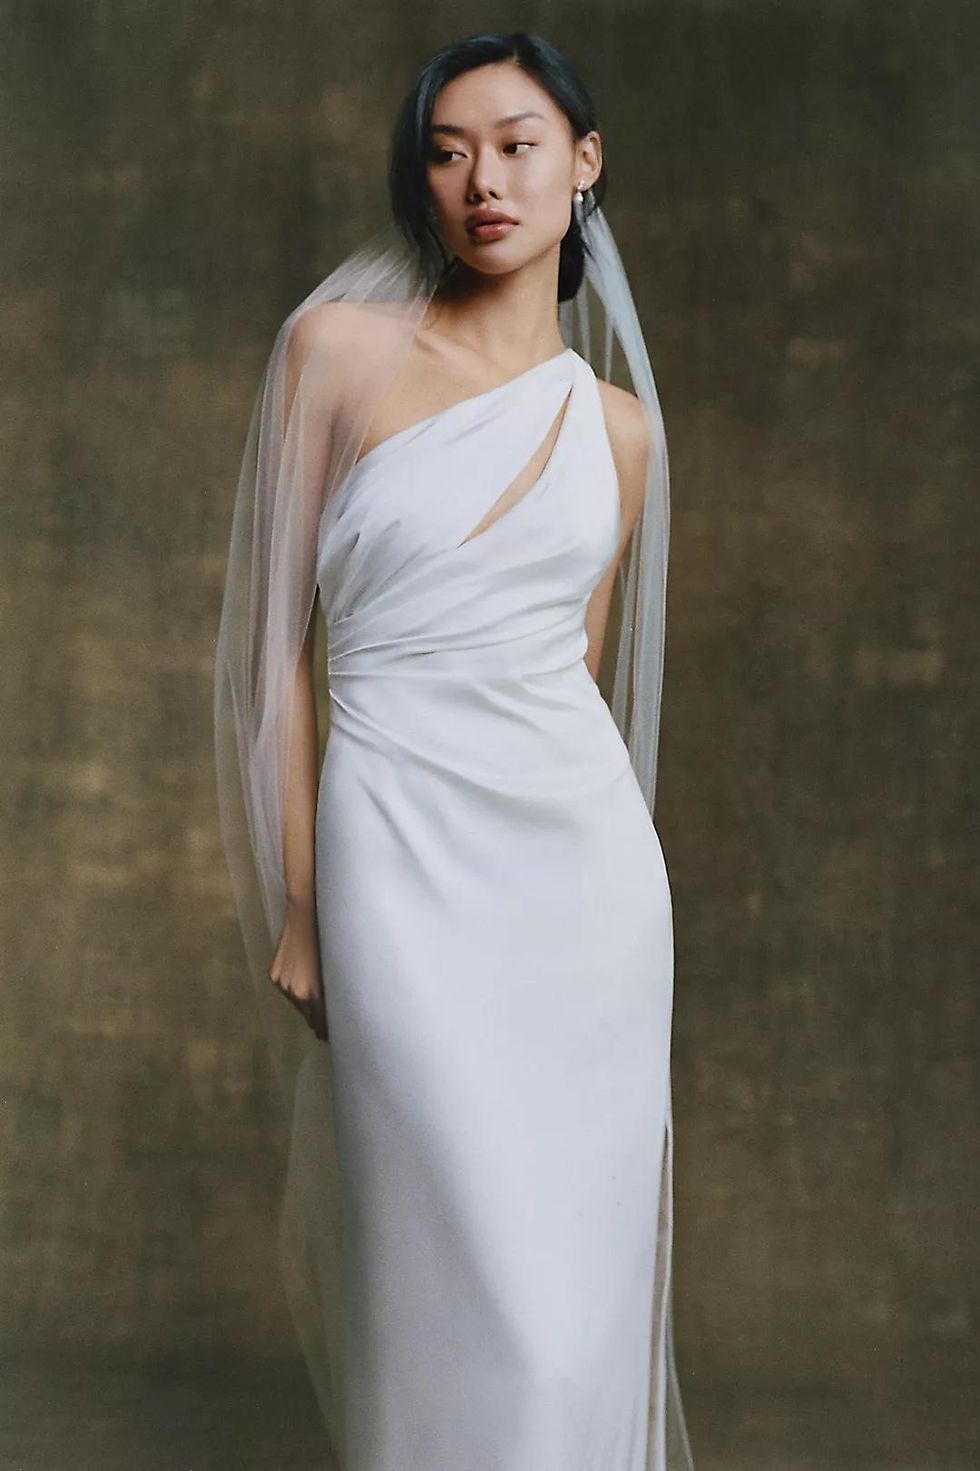 BHLDN by Carly Cushnie Clementine Dress Grecian style wedding dresses